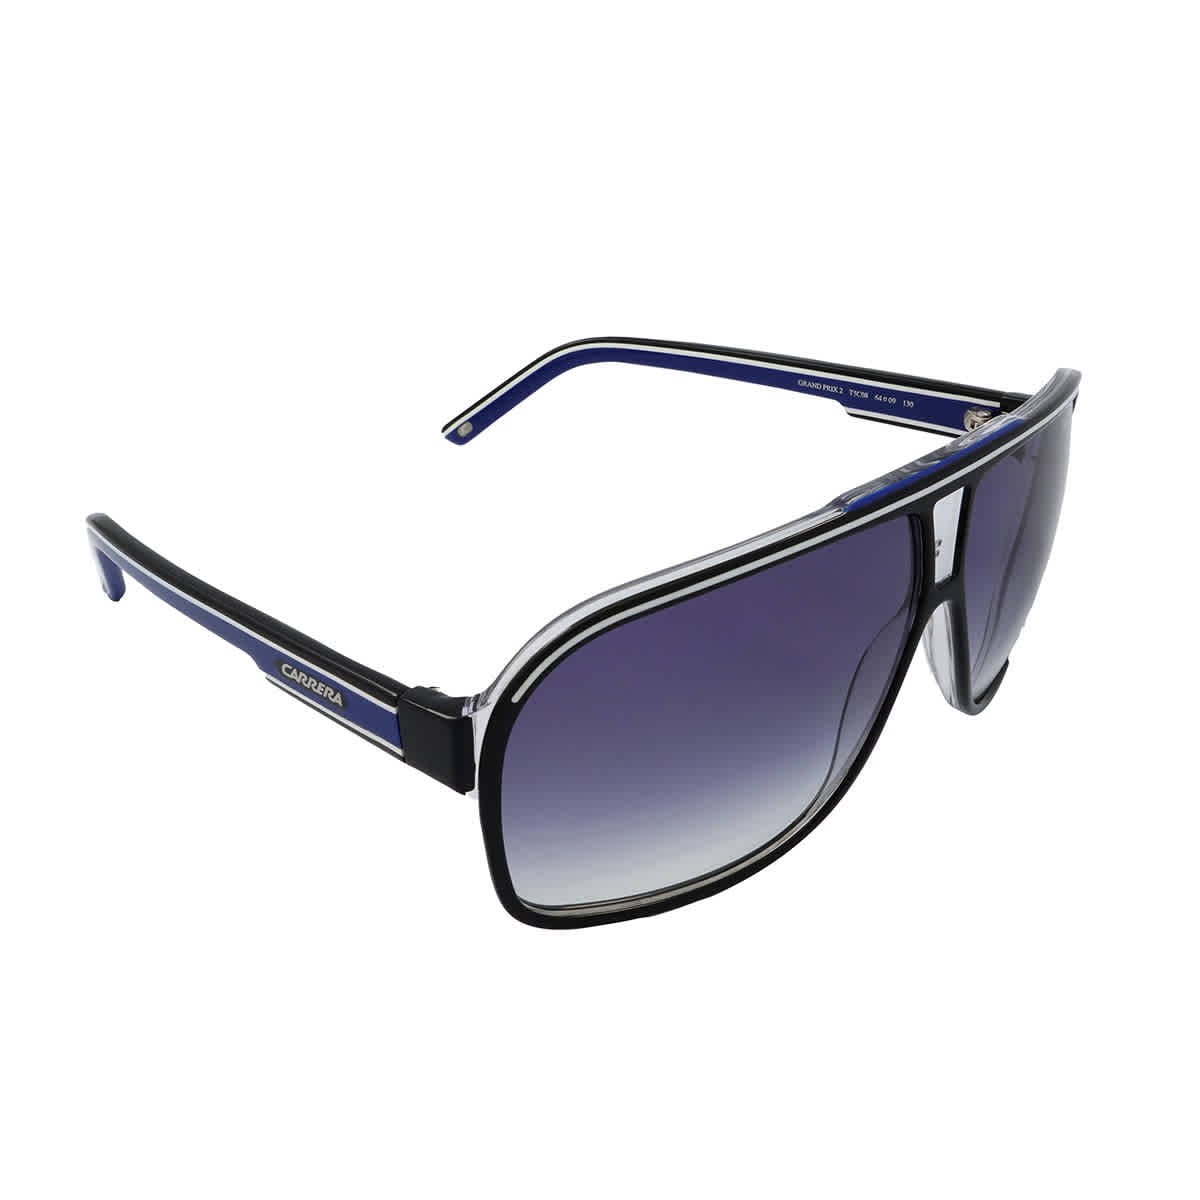 Carrera Blue Gradient Navigator Men's Sunglasses GRAND PRIX 2/S 0T5C/08 64  